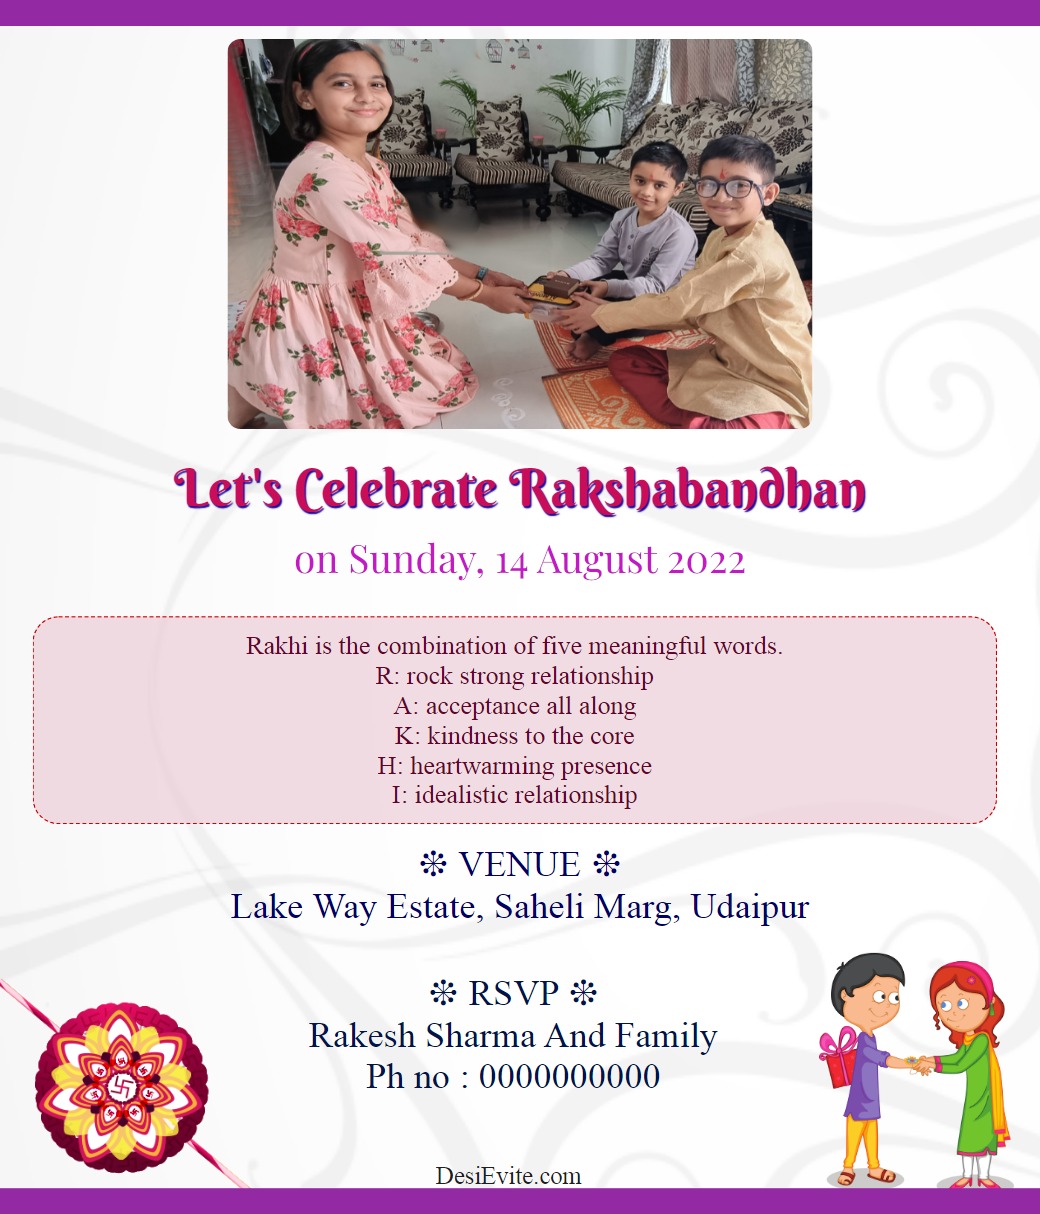 akshabandhan invitation card with photo 109 